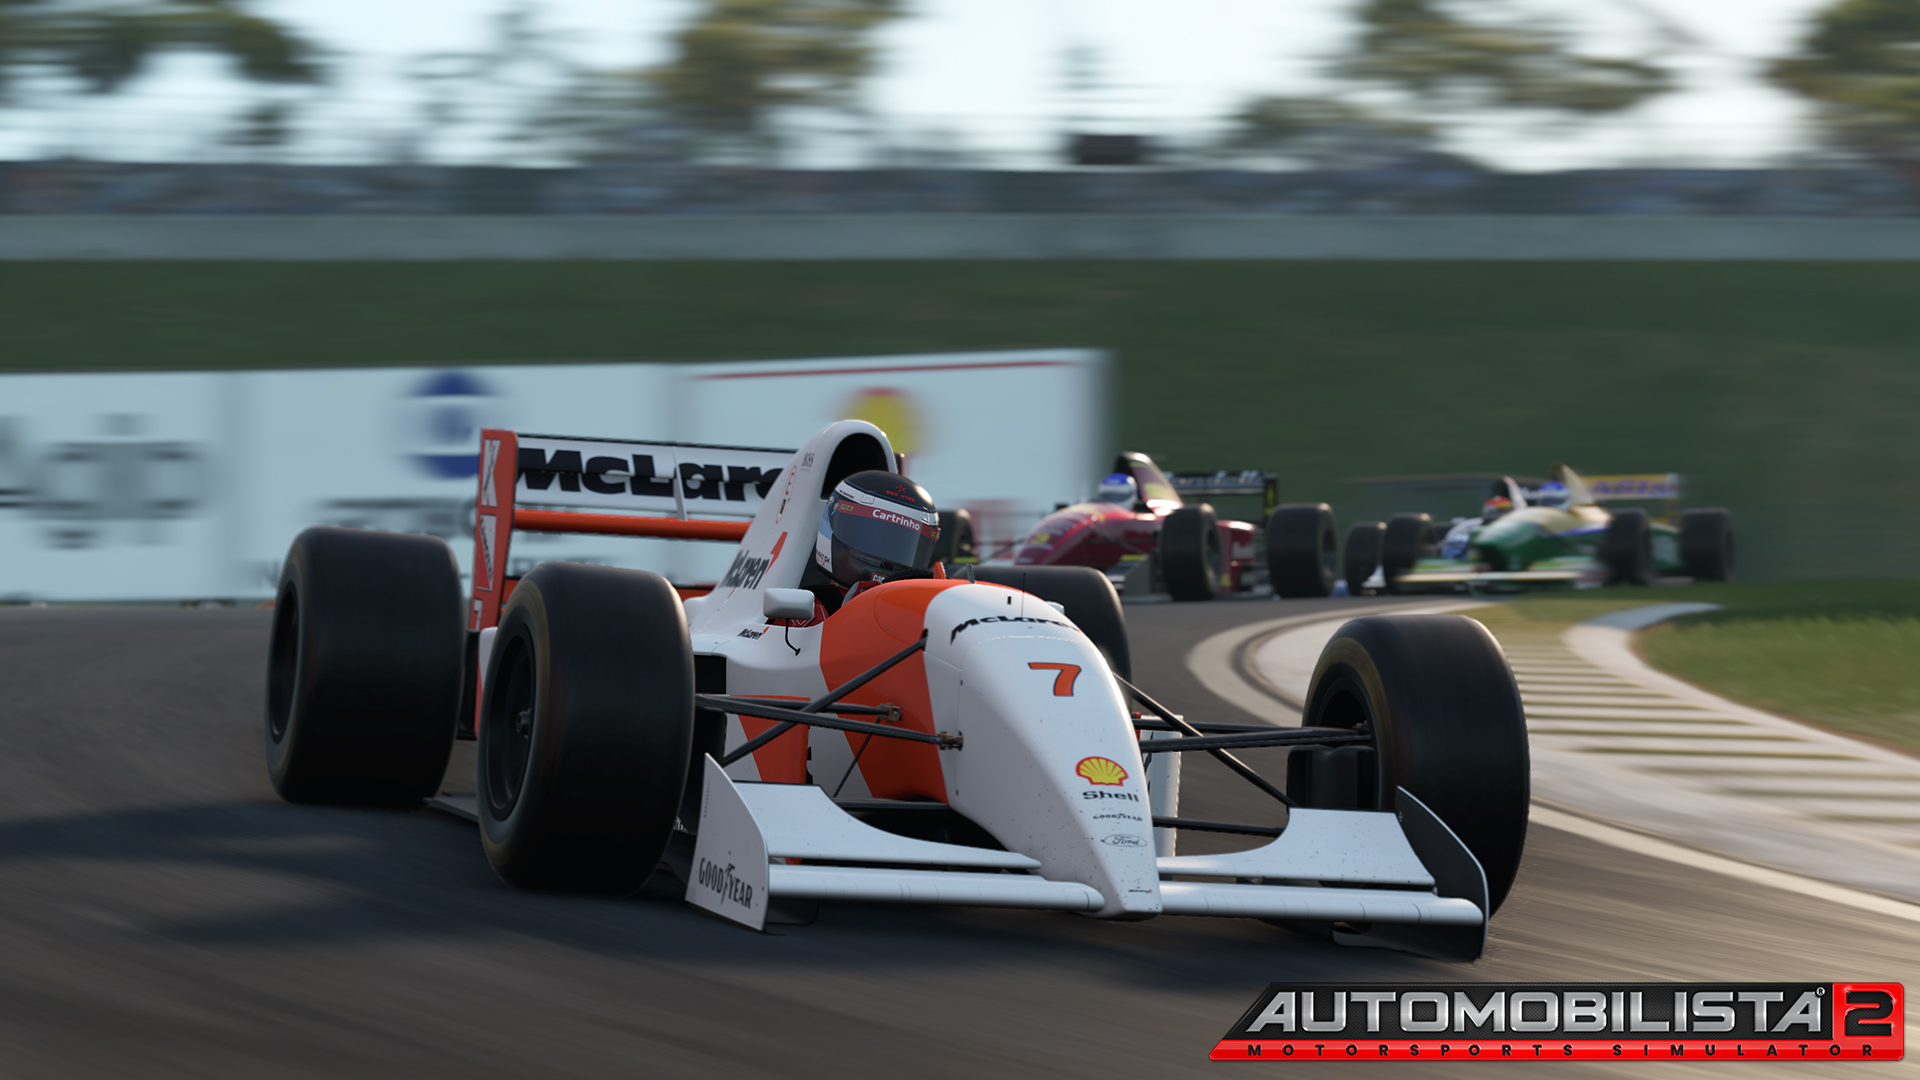 F1 23 Australia Race Setup For Controller (Dry & Wet) – Sim Racing